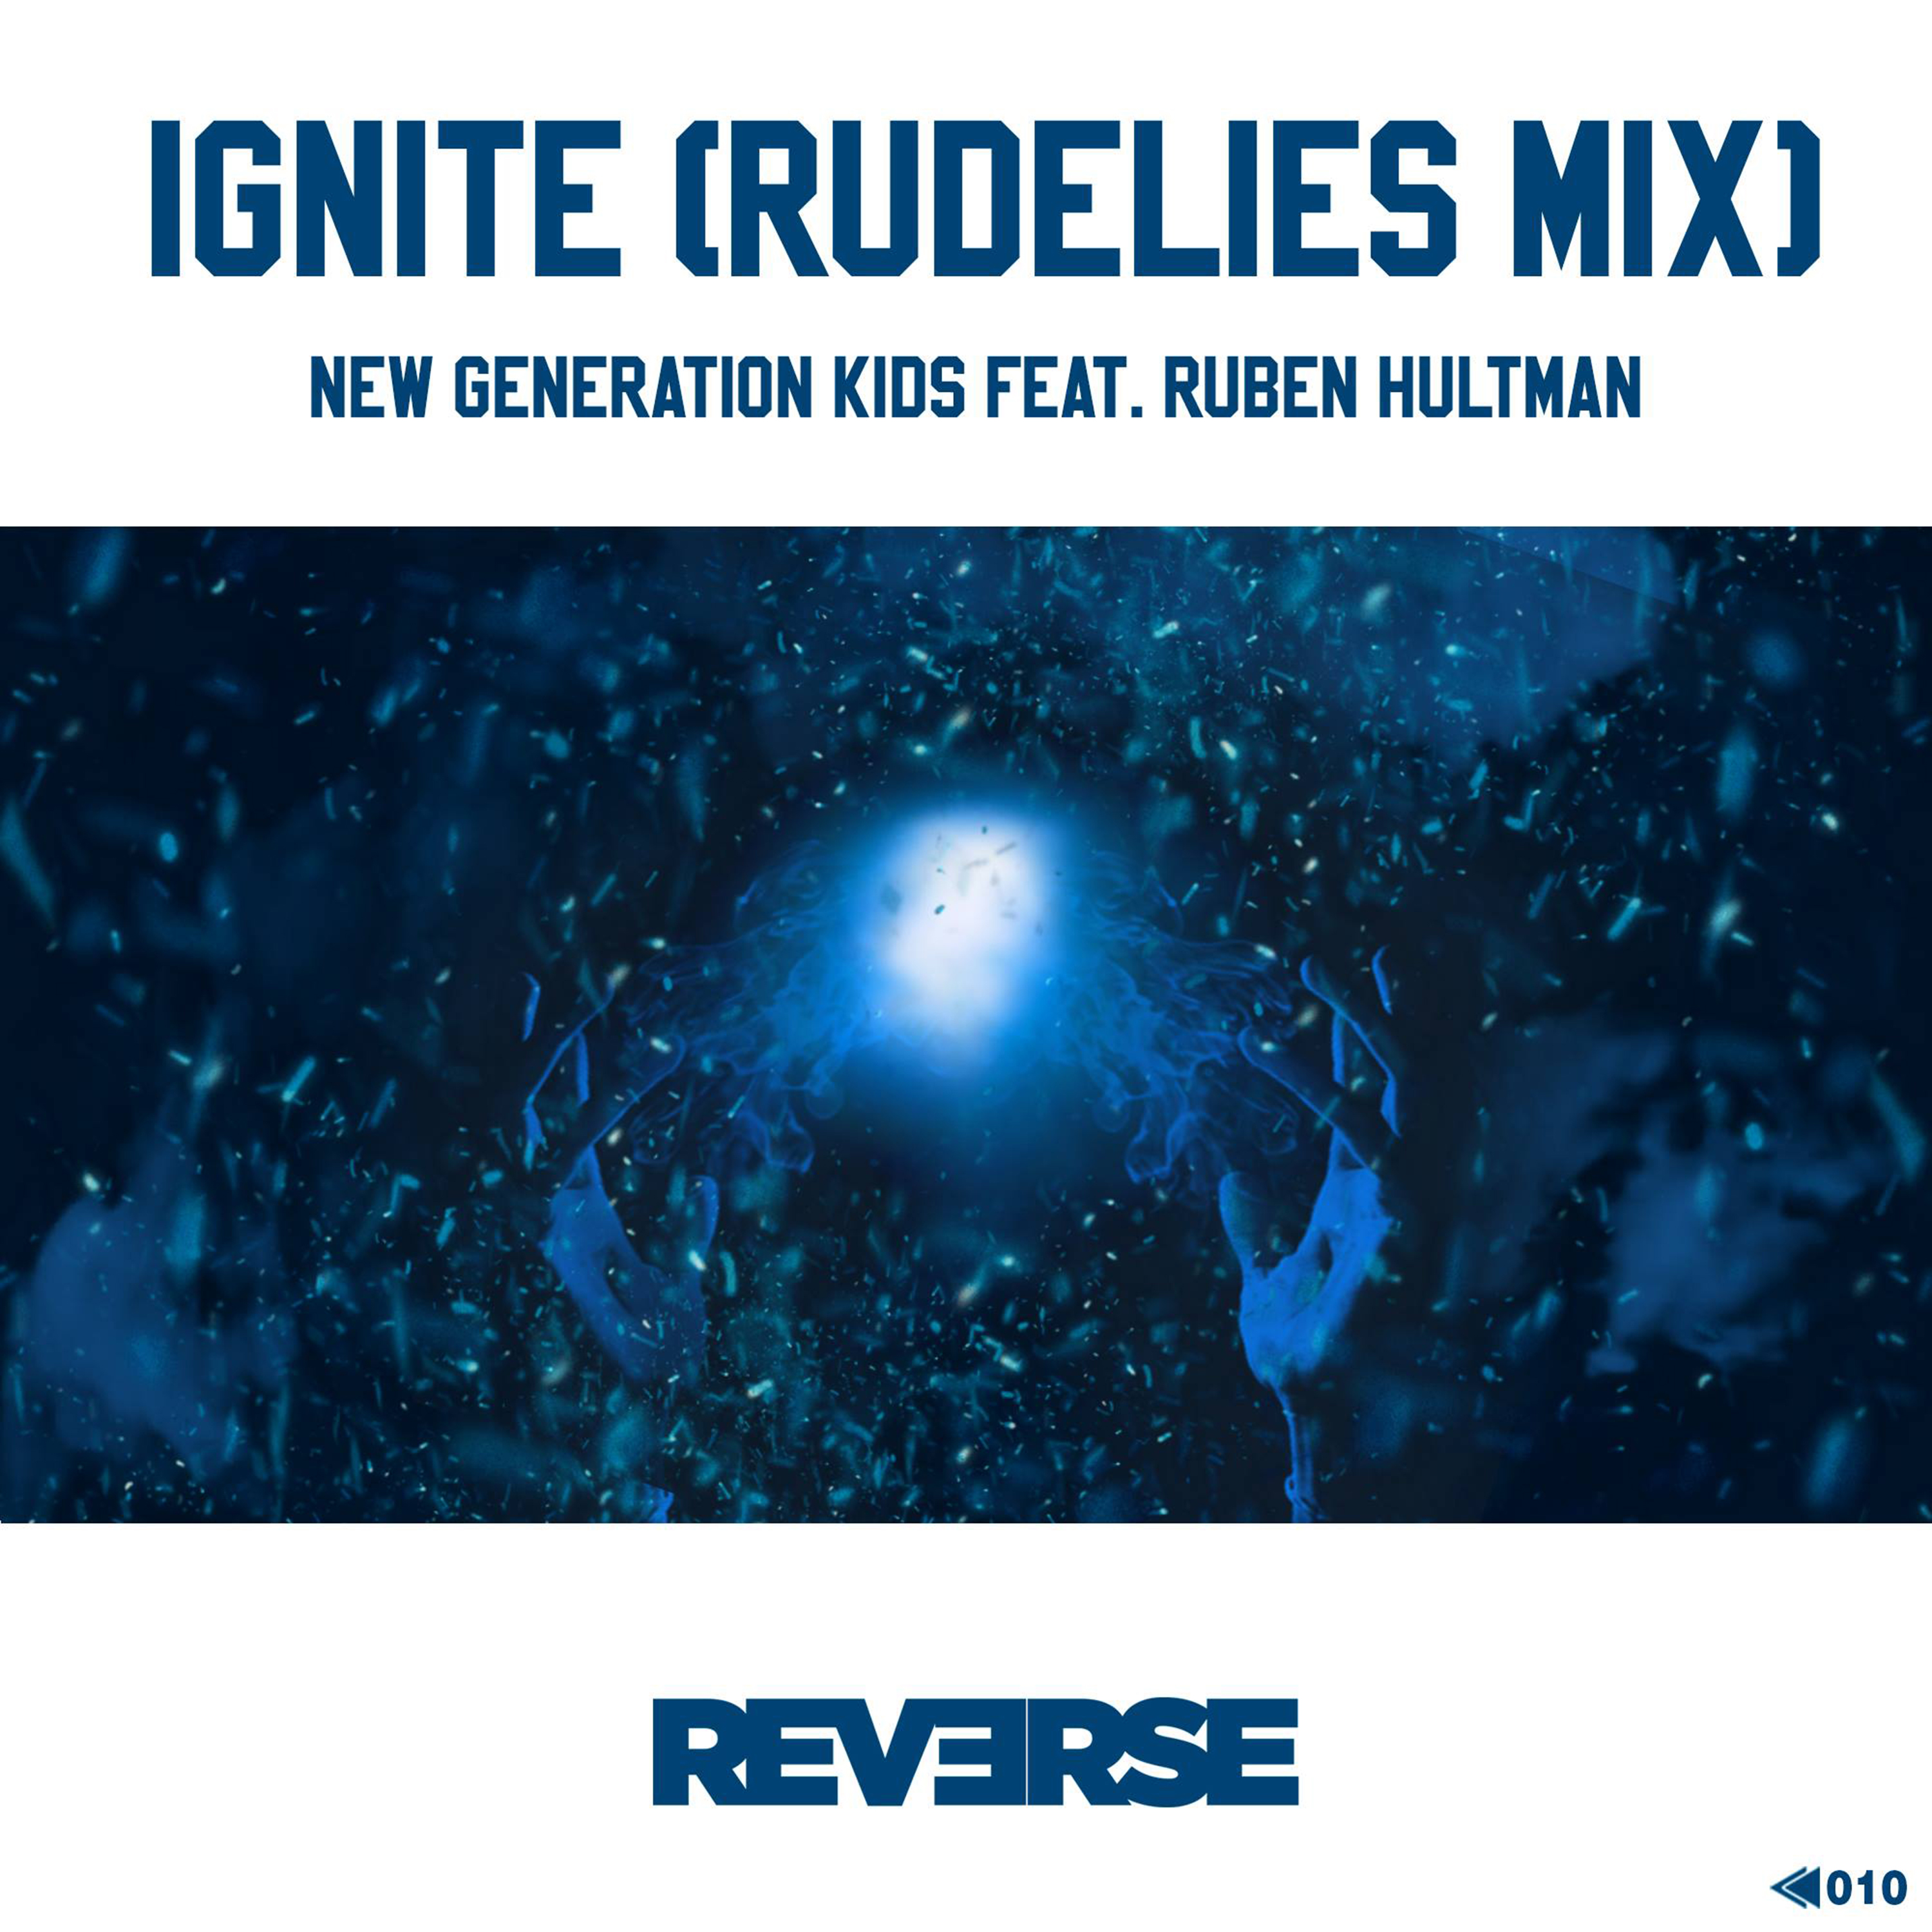 Ignite (RudeLies Mix)